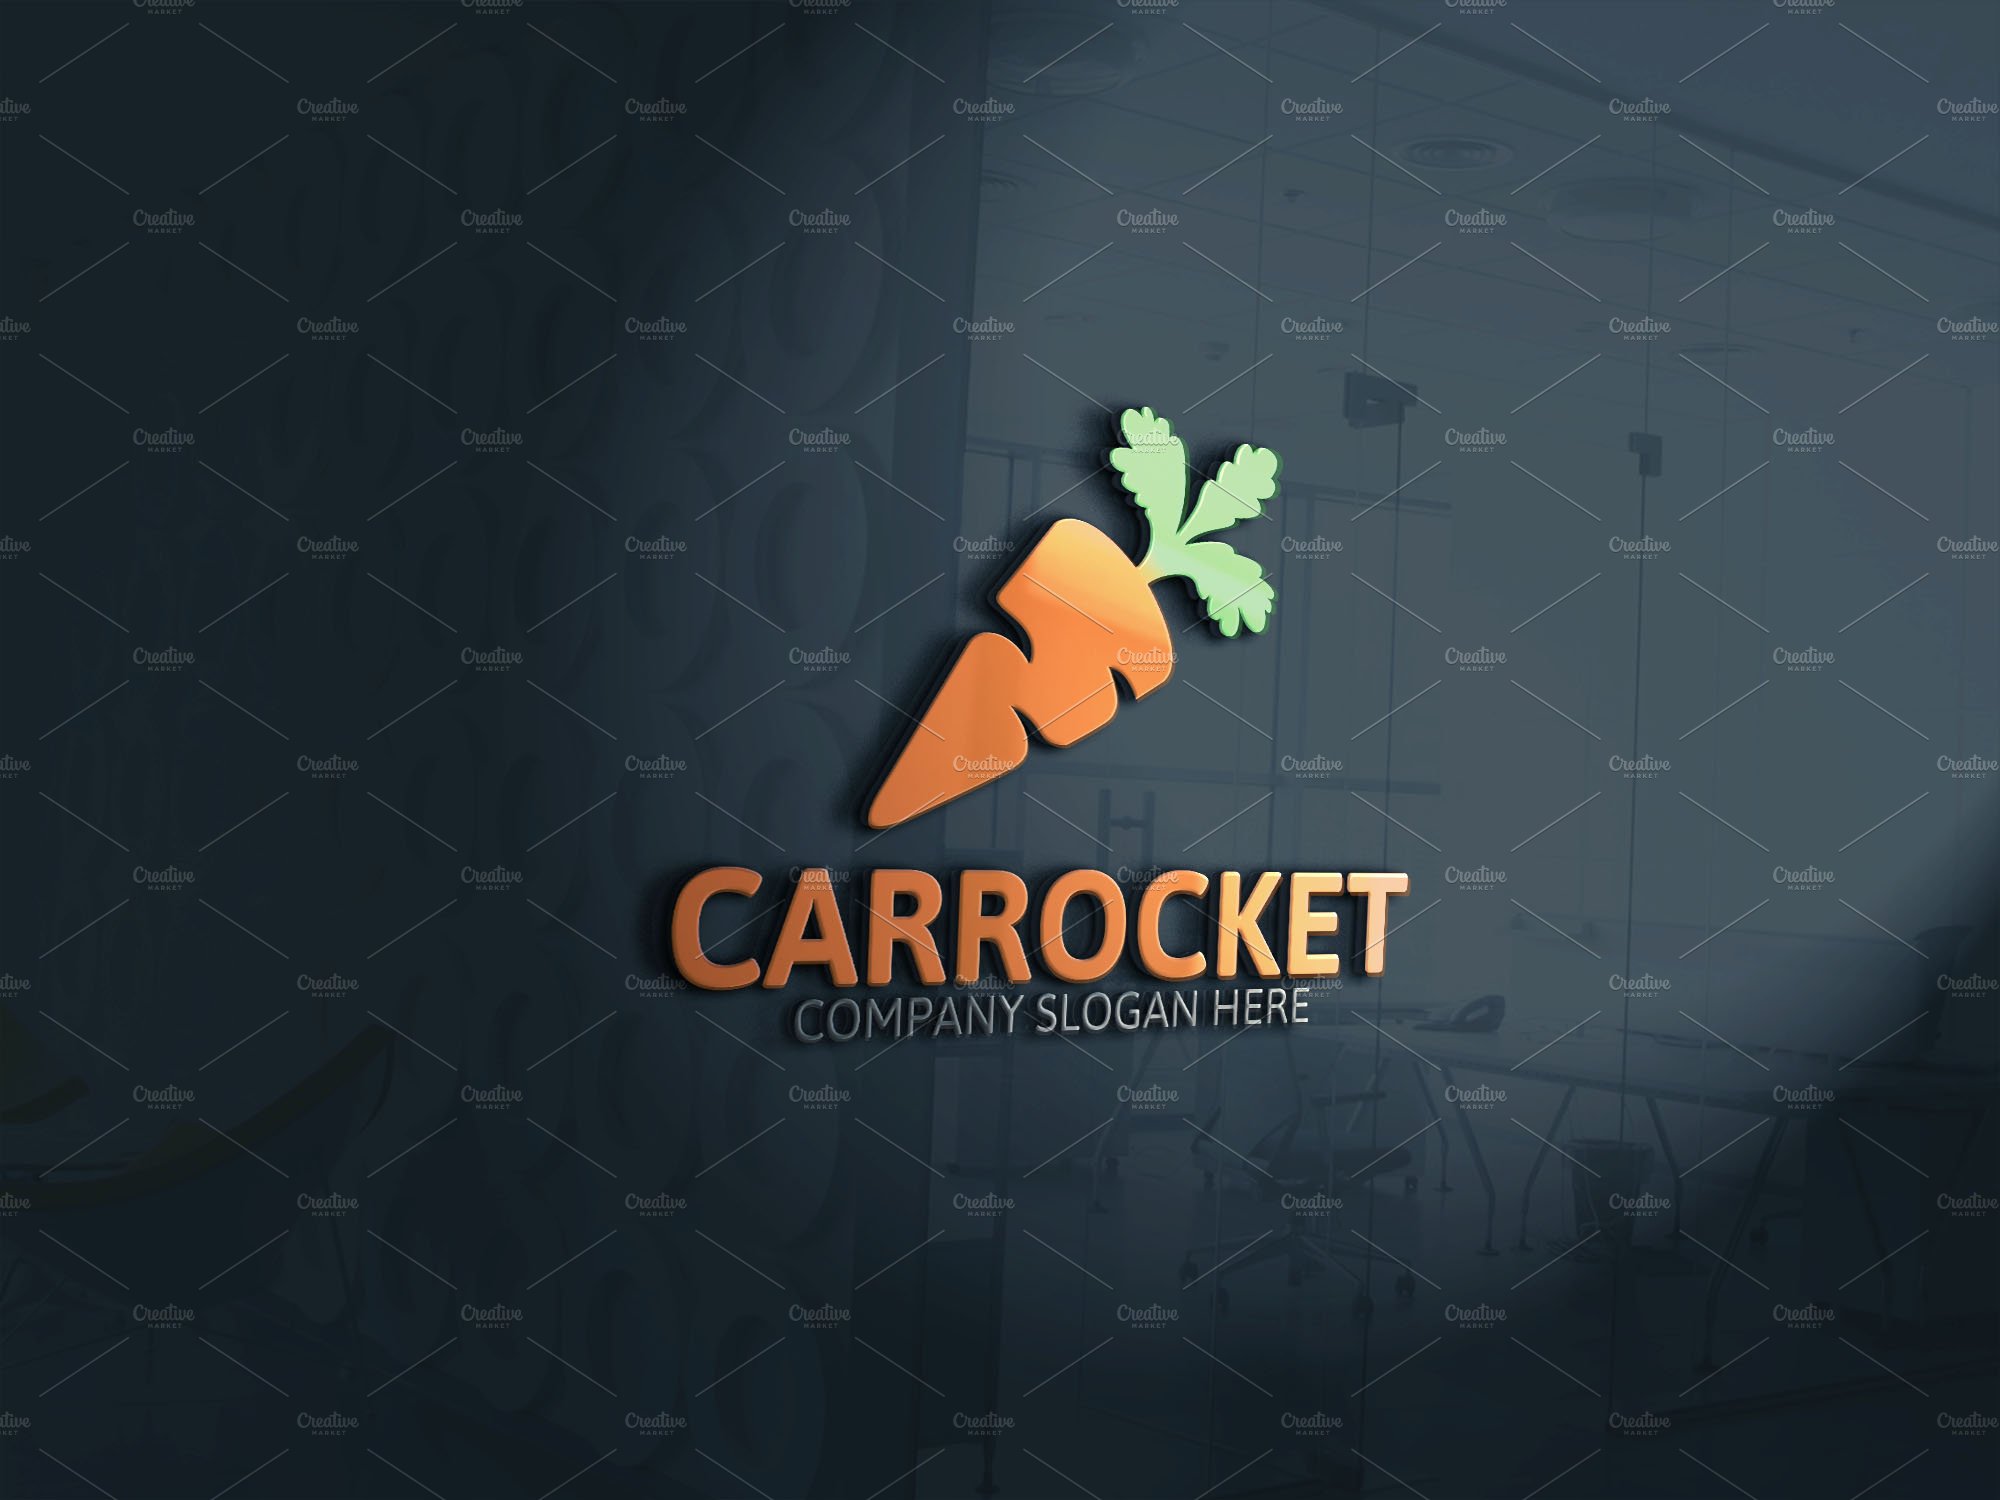 Carrot Logo cover image.